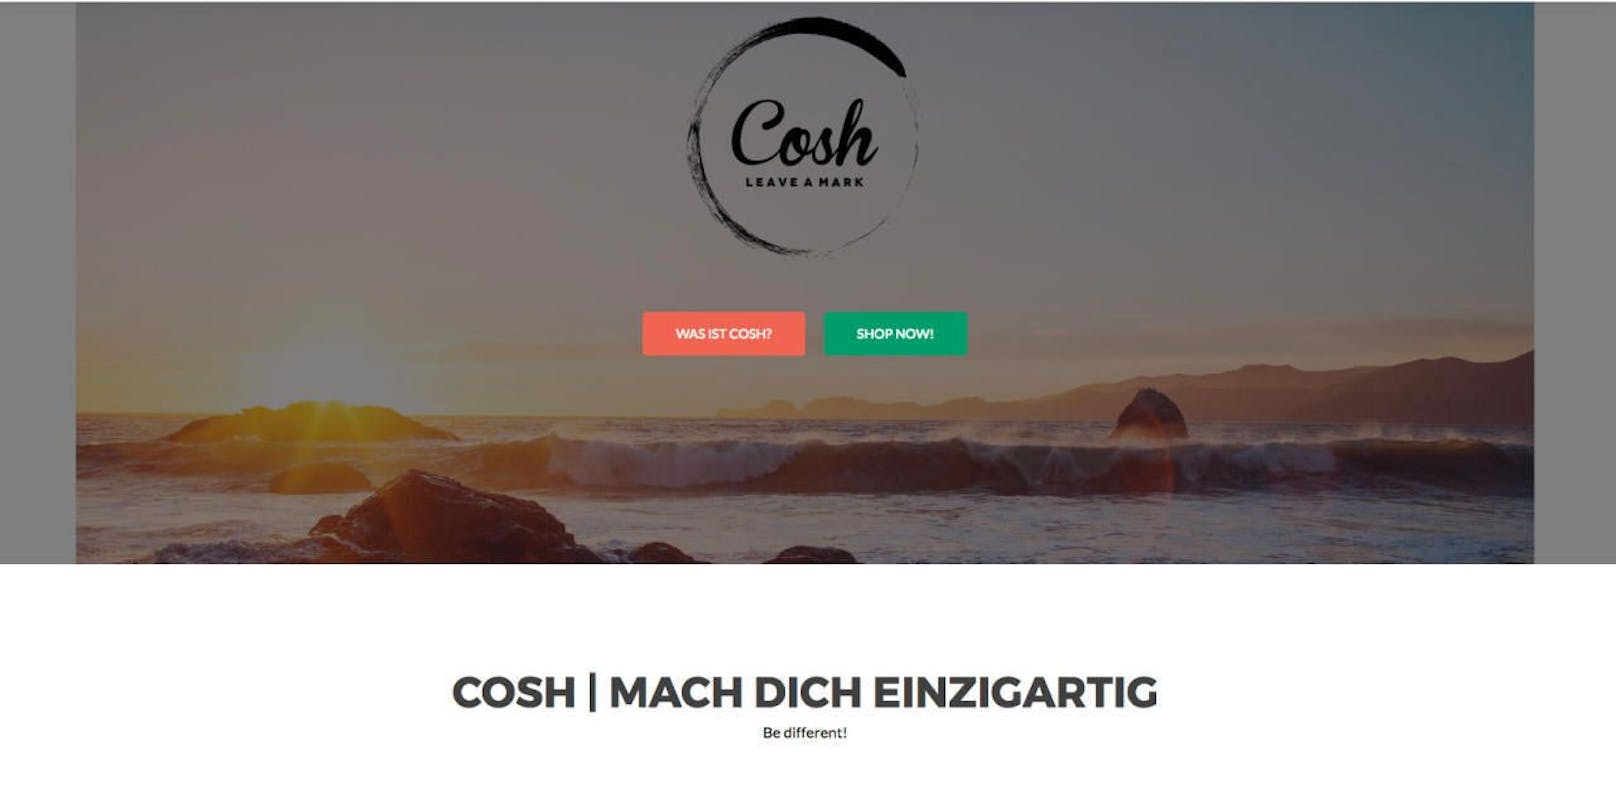 Cosh - Leave a mark